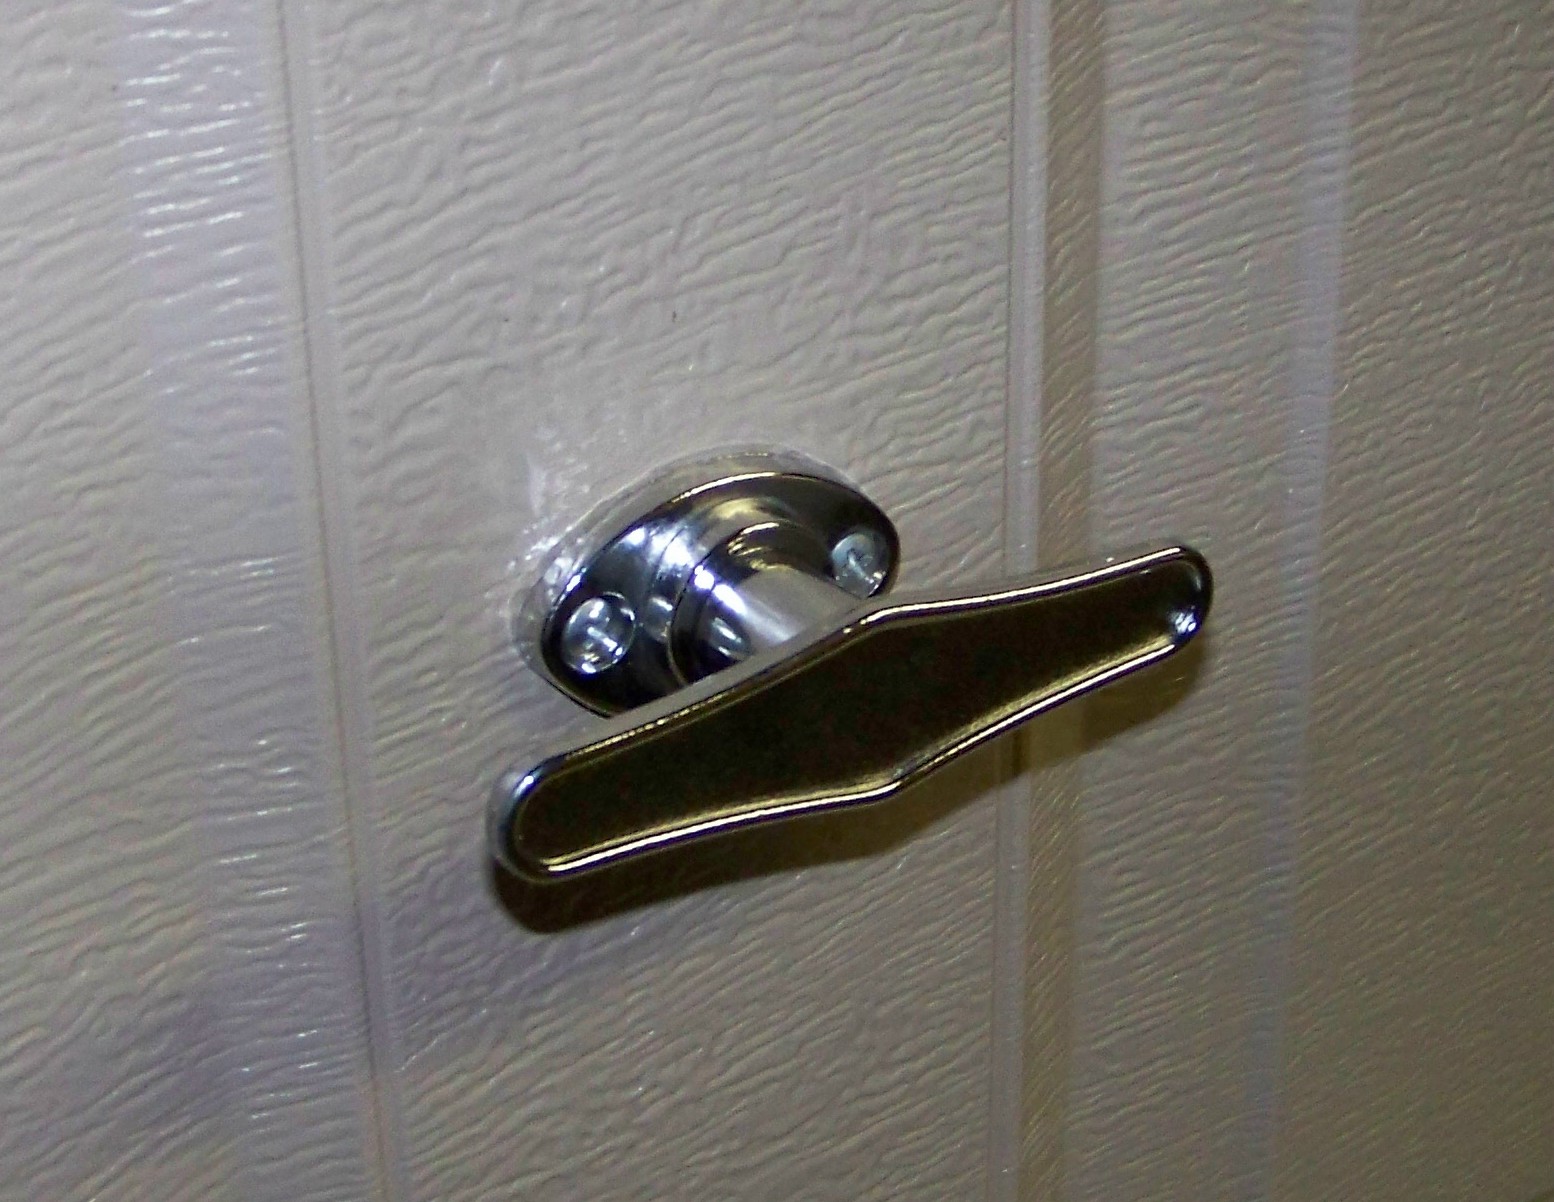 How To Install Clopay Garage Door Keyed Lock Set